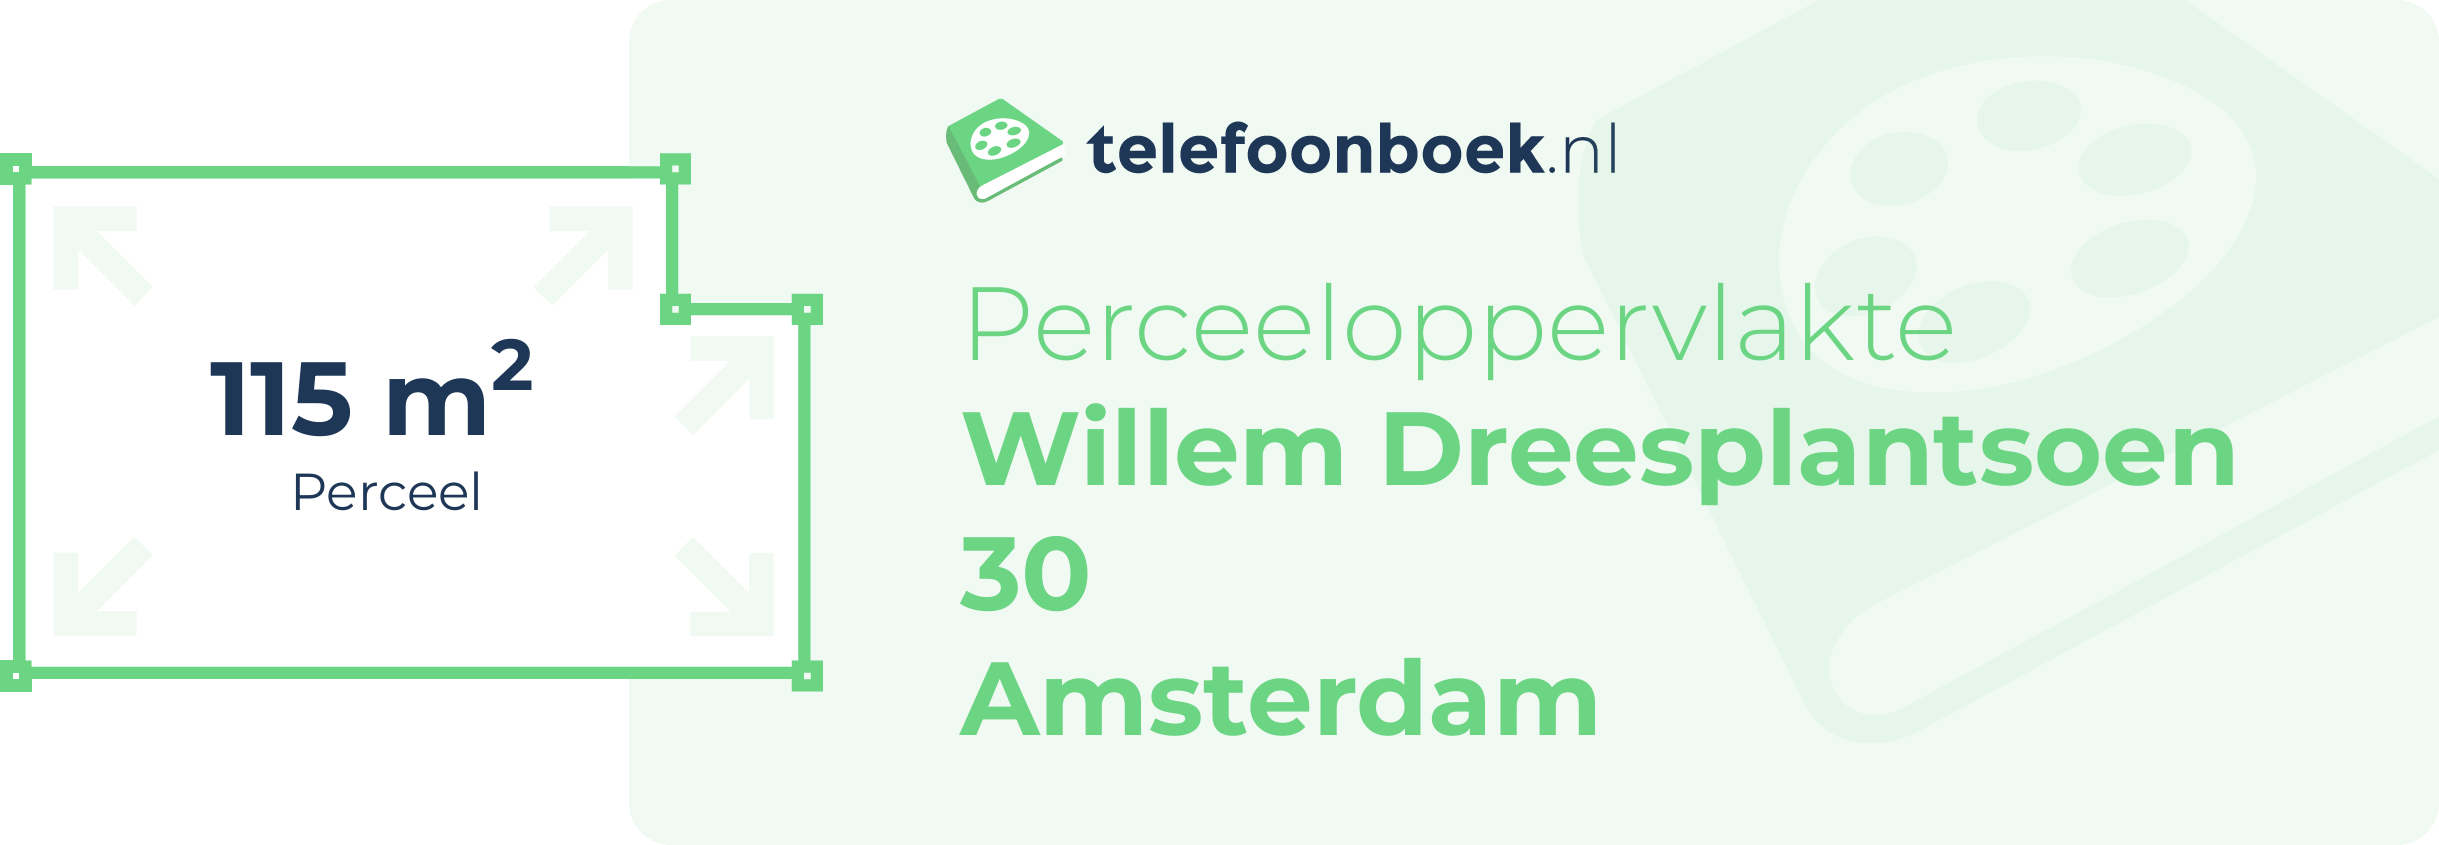 Perceeloppervlakte Willem Dreesplantsoen 30 Amsterdam